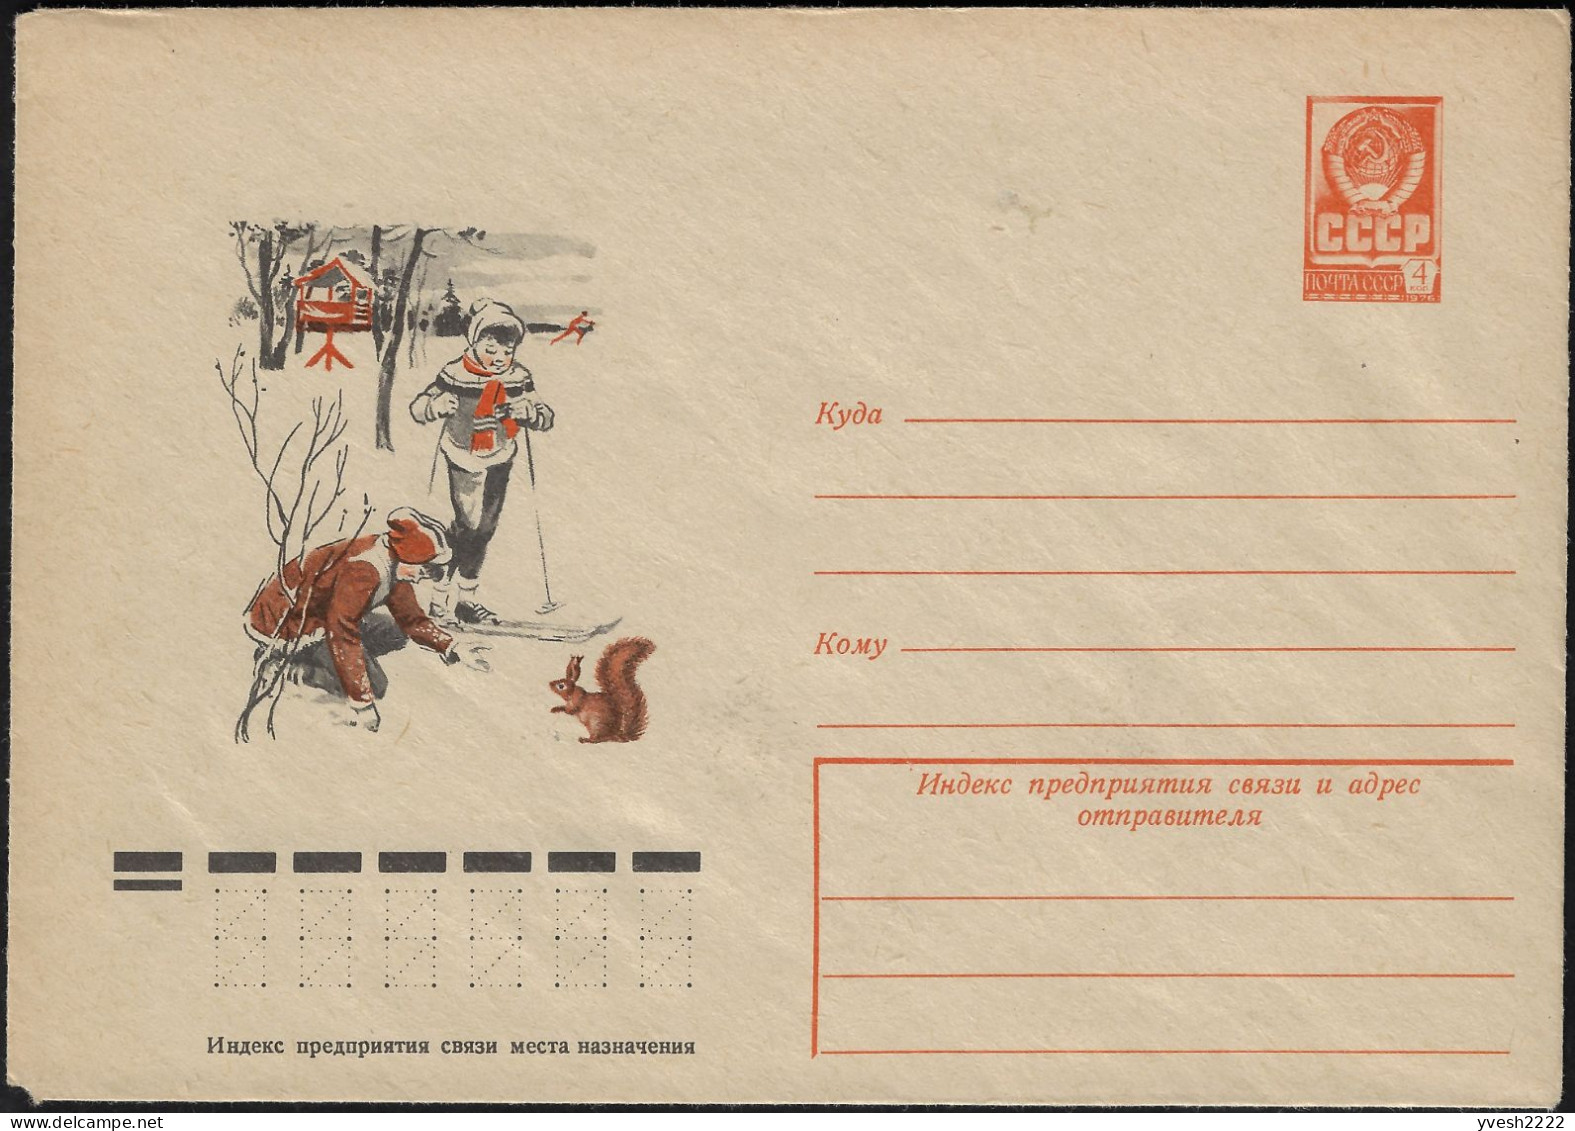 URSS 1977. Entier Postal Enveloppe. Enfants, Ski De Fond, écureuil - Nager